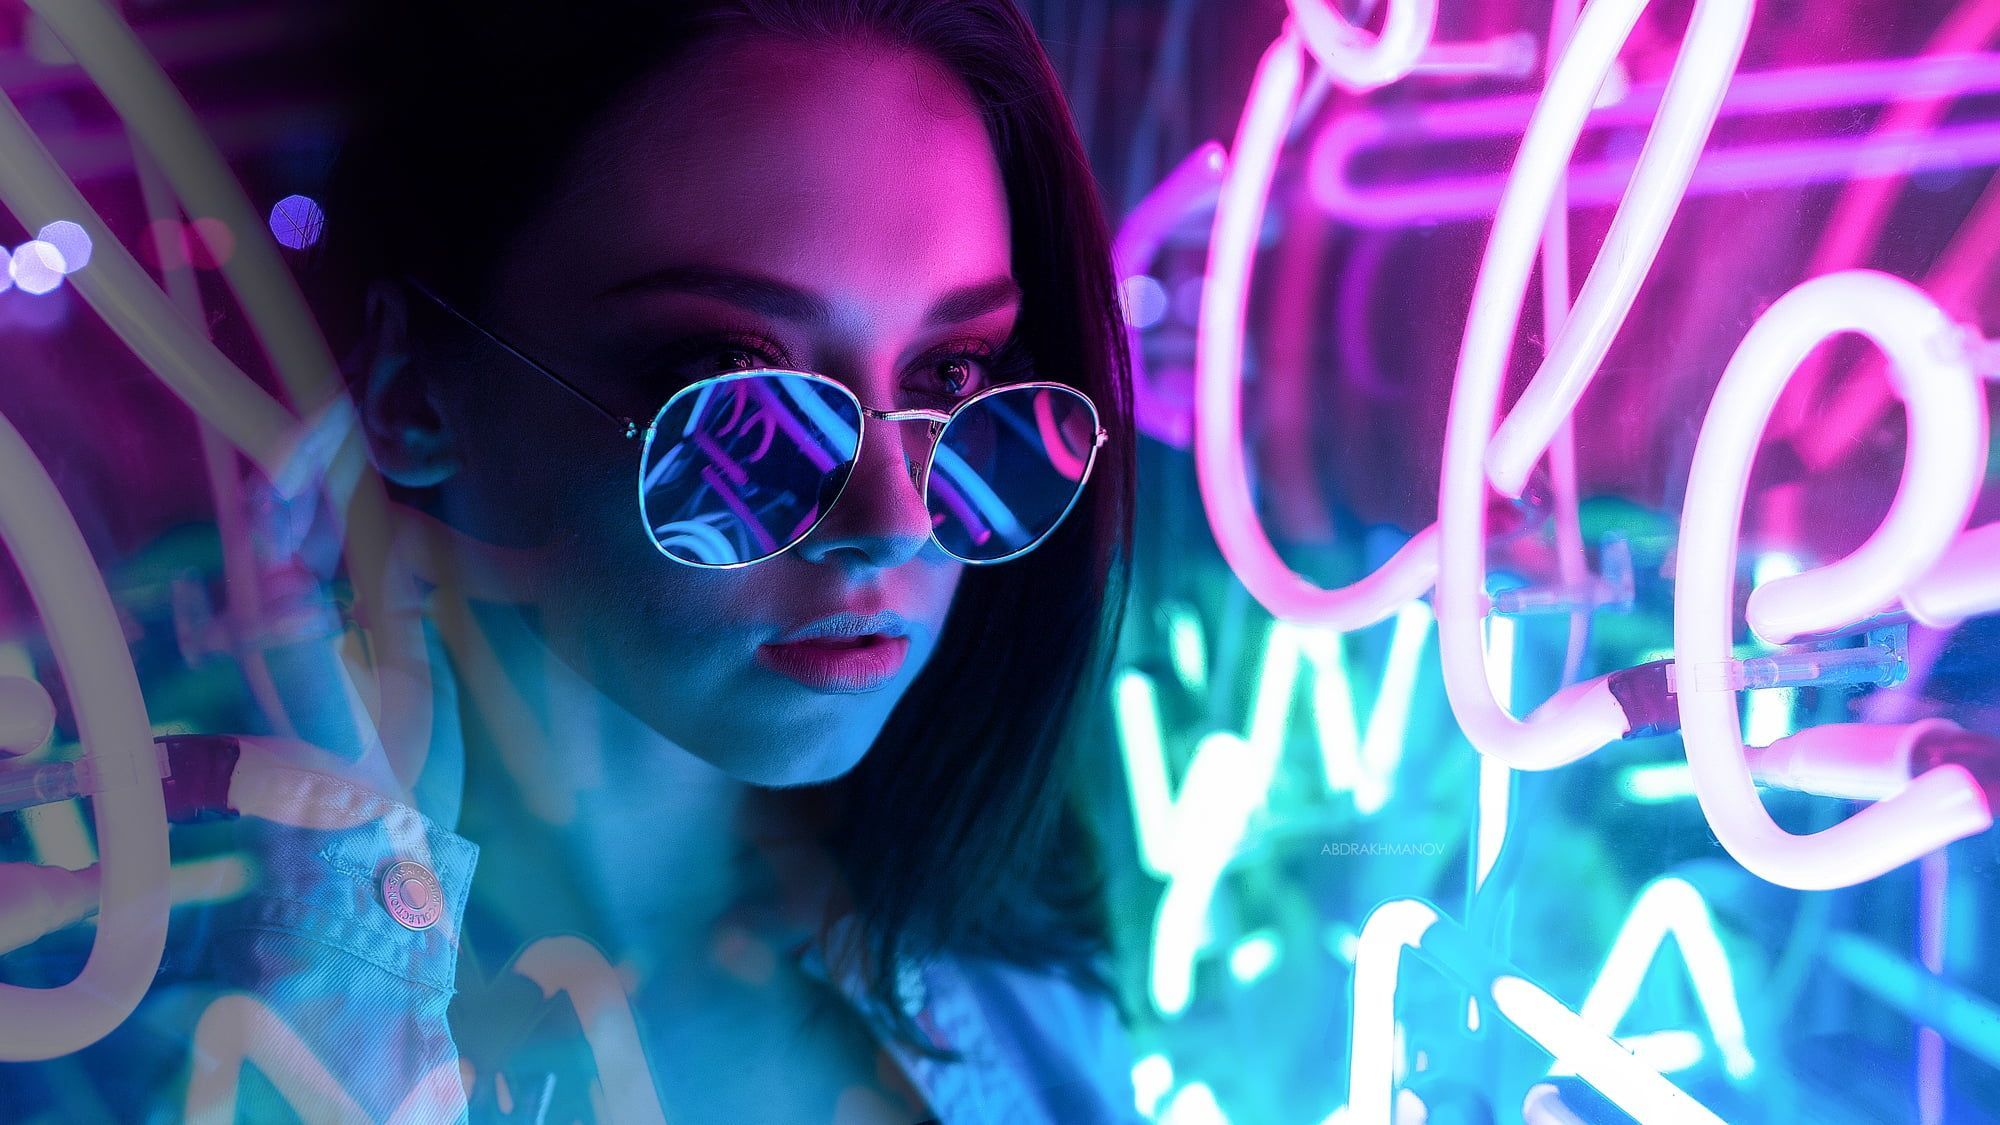 Lenar Abdrakhmanov #women #model #portrait #face women with shades looking into the distance #neon neon lights P #wallpa. Dance music, Club dance music, Neon